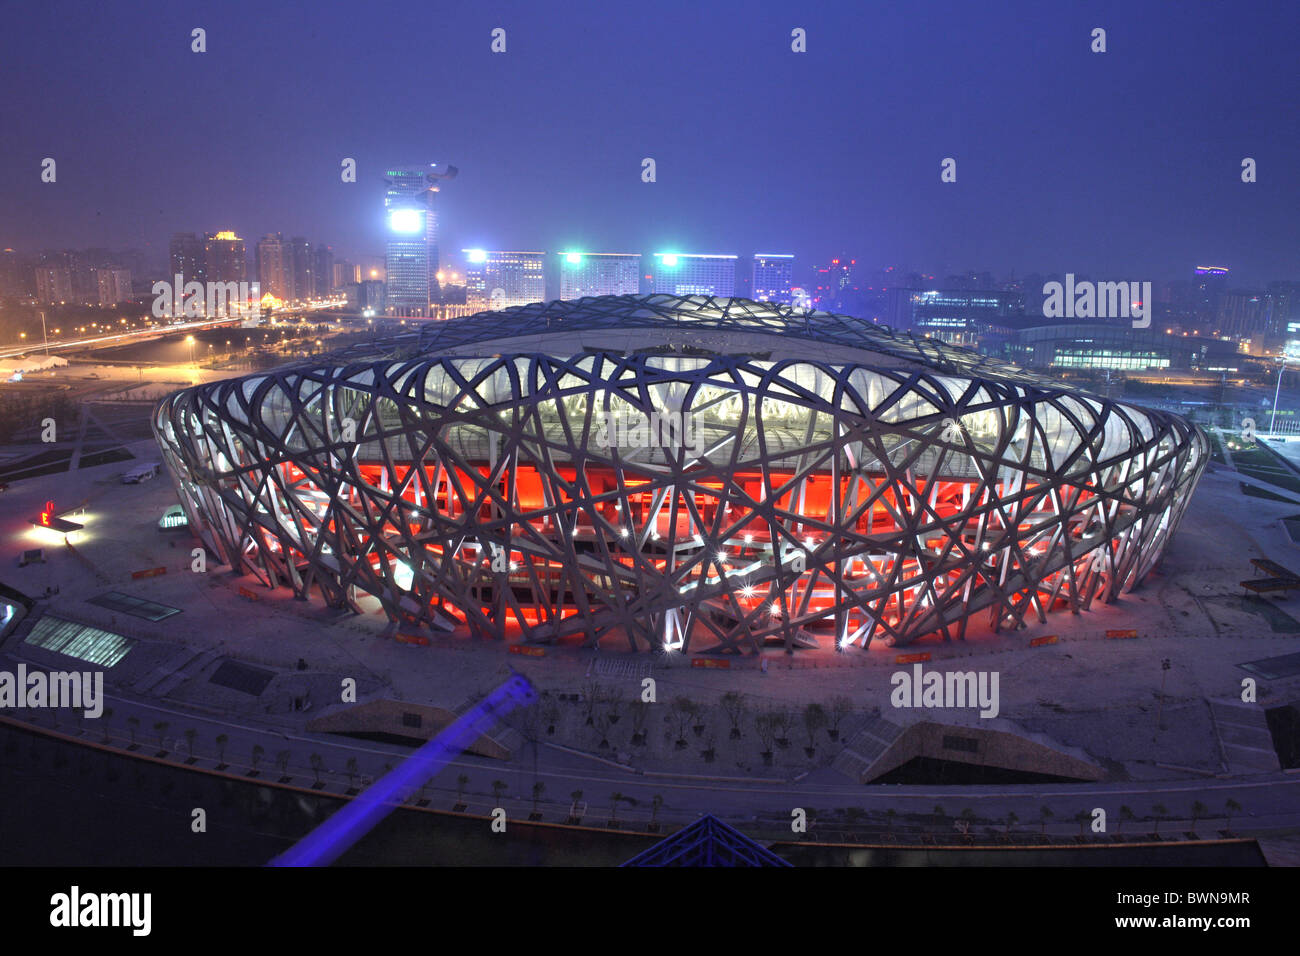 China Asien Beijing Peking April 2008 Nationalstadion 2008 Olympischen Sommerspiele Vogel nest Herzog und de Meuron Bogen Stockfoto